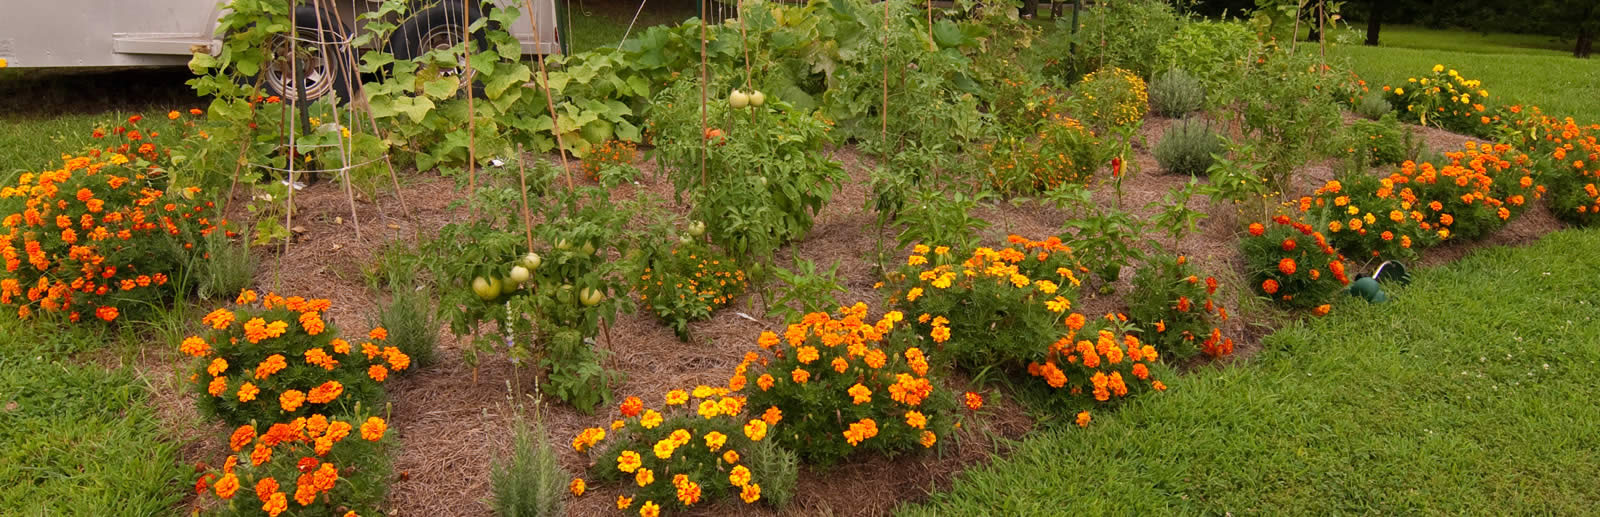 vegetable garden design ideas and installations